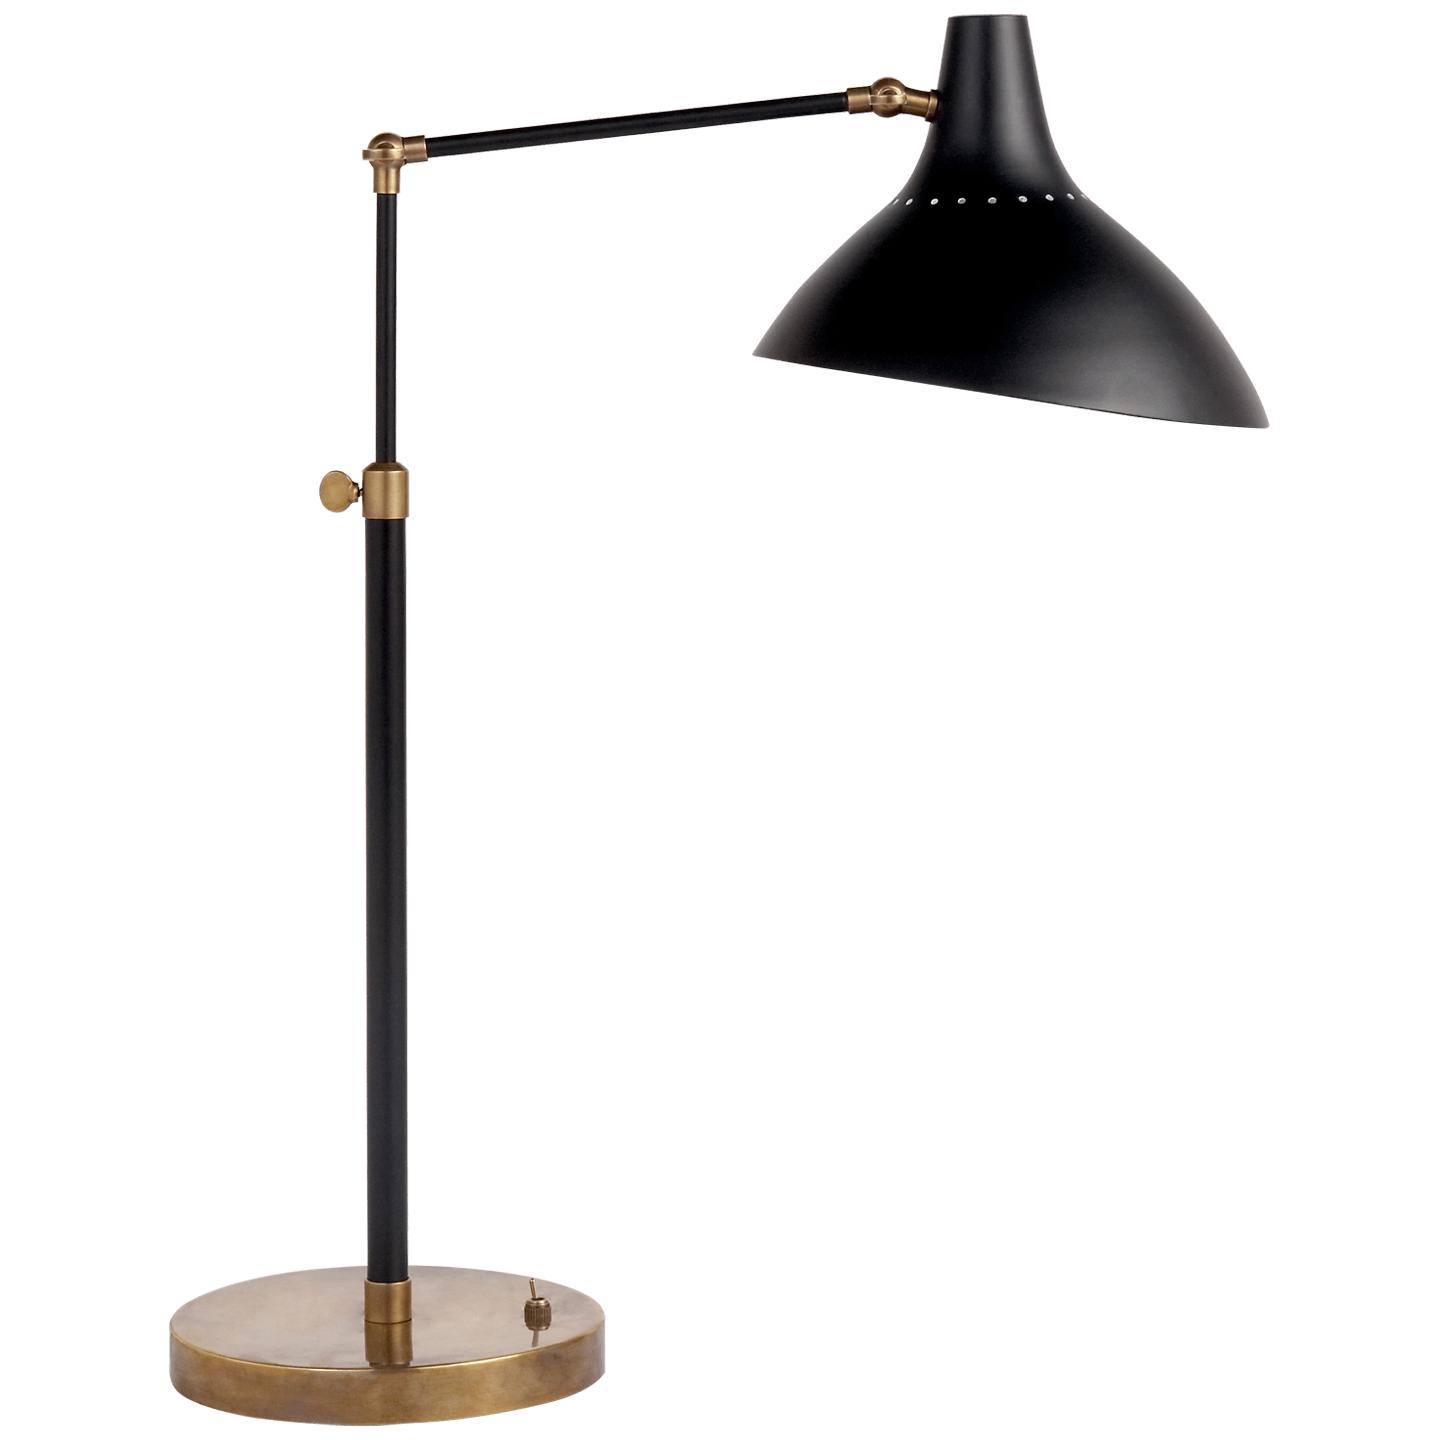 Купить Настольная лампа Charlton Table Lamp в интернет-магазине roooms.ru